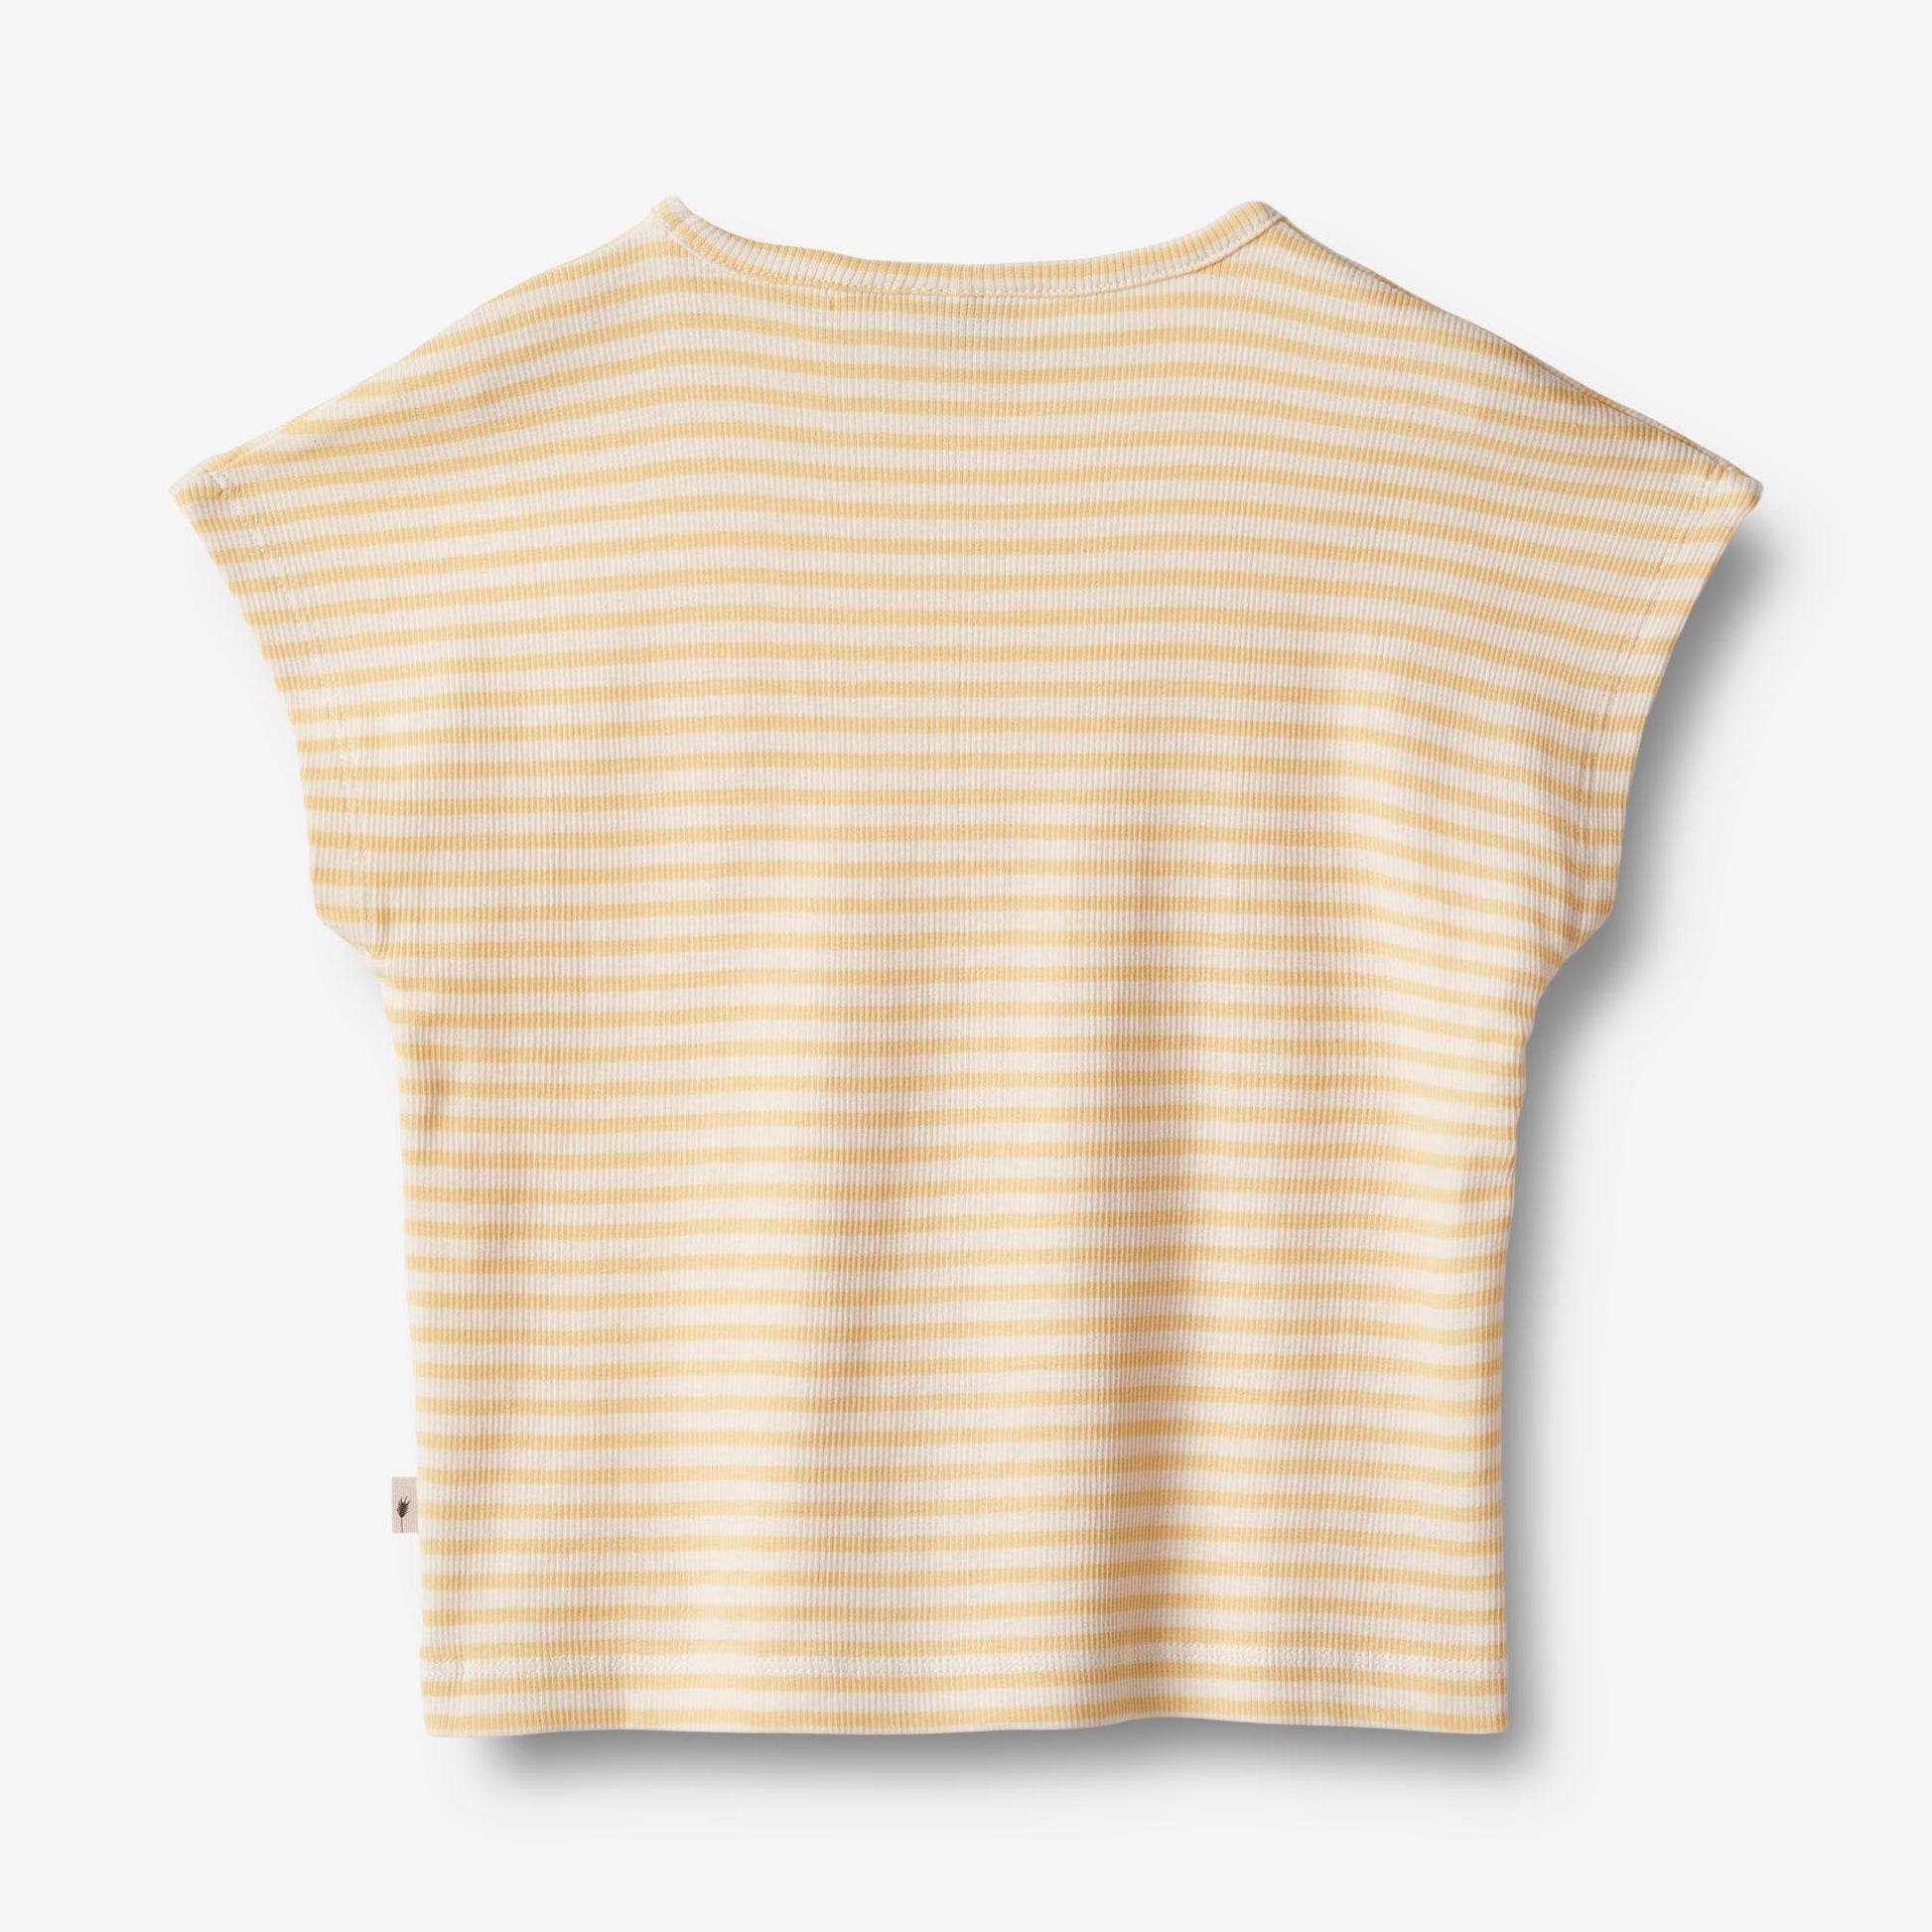 Wheat 'Bette' S/S Children's T-Shirt - Pale Apricot Stripe